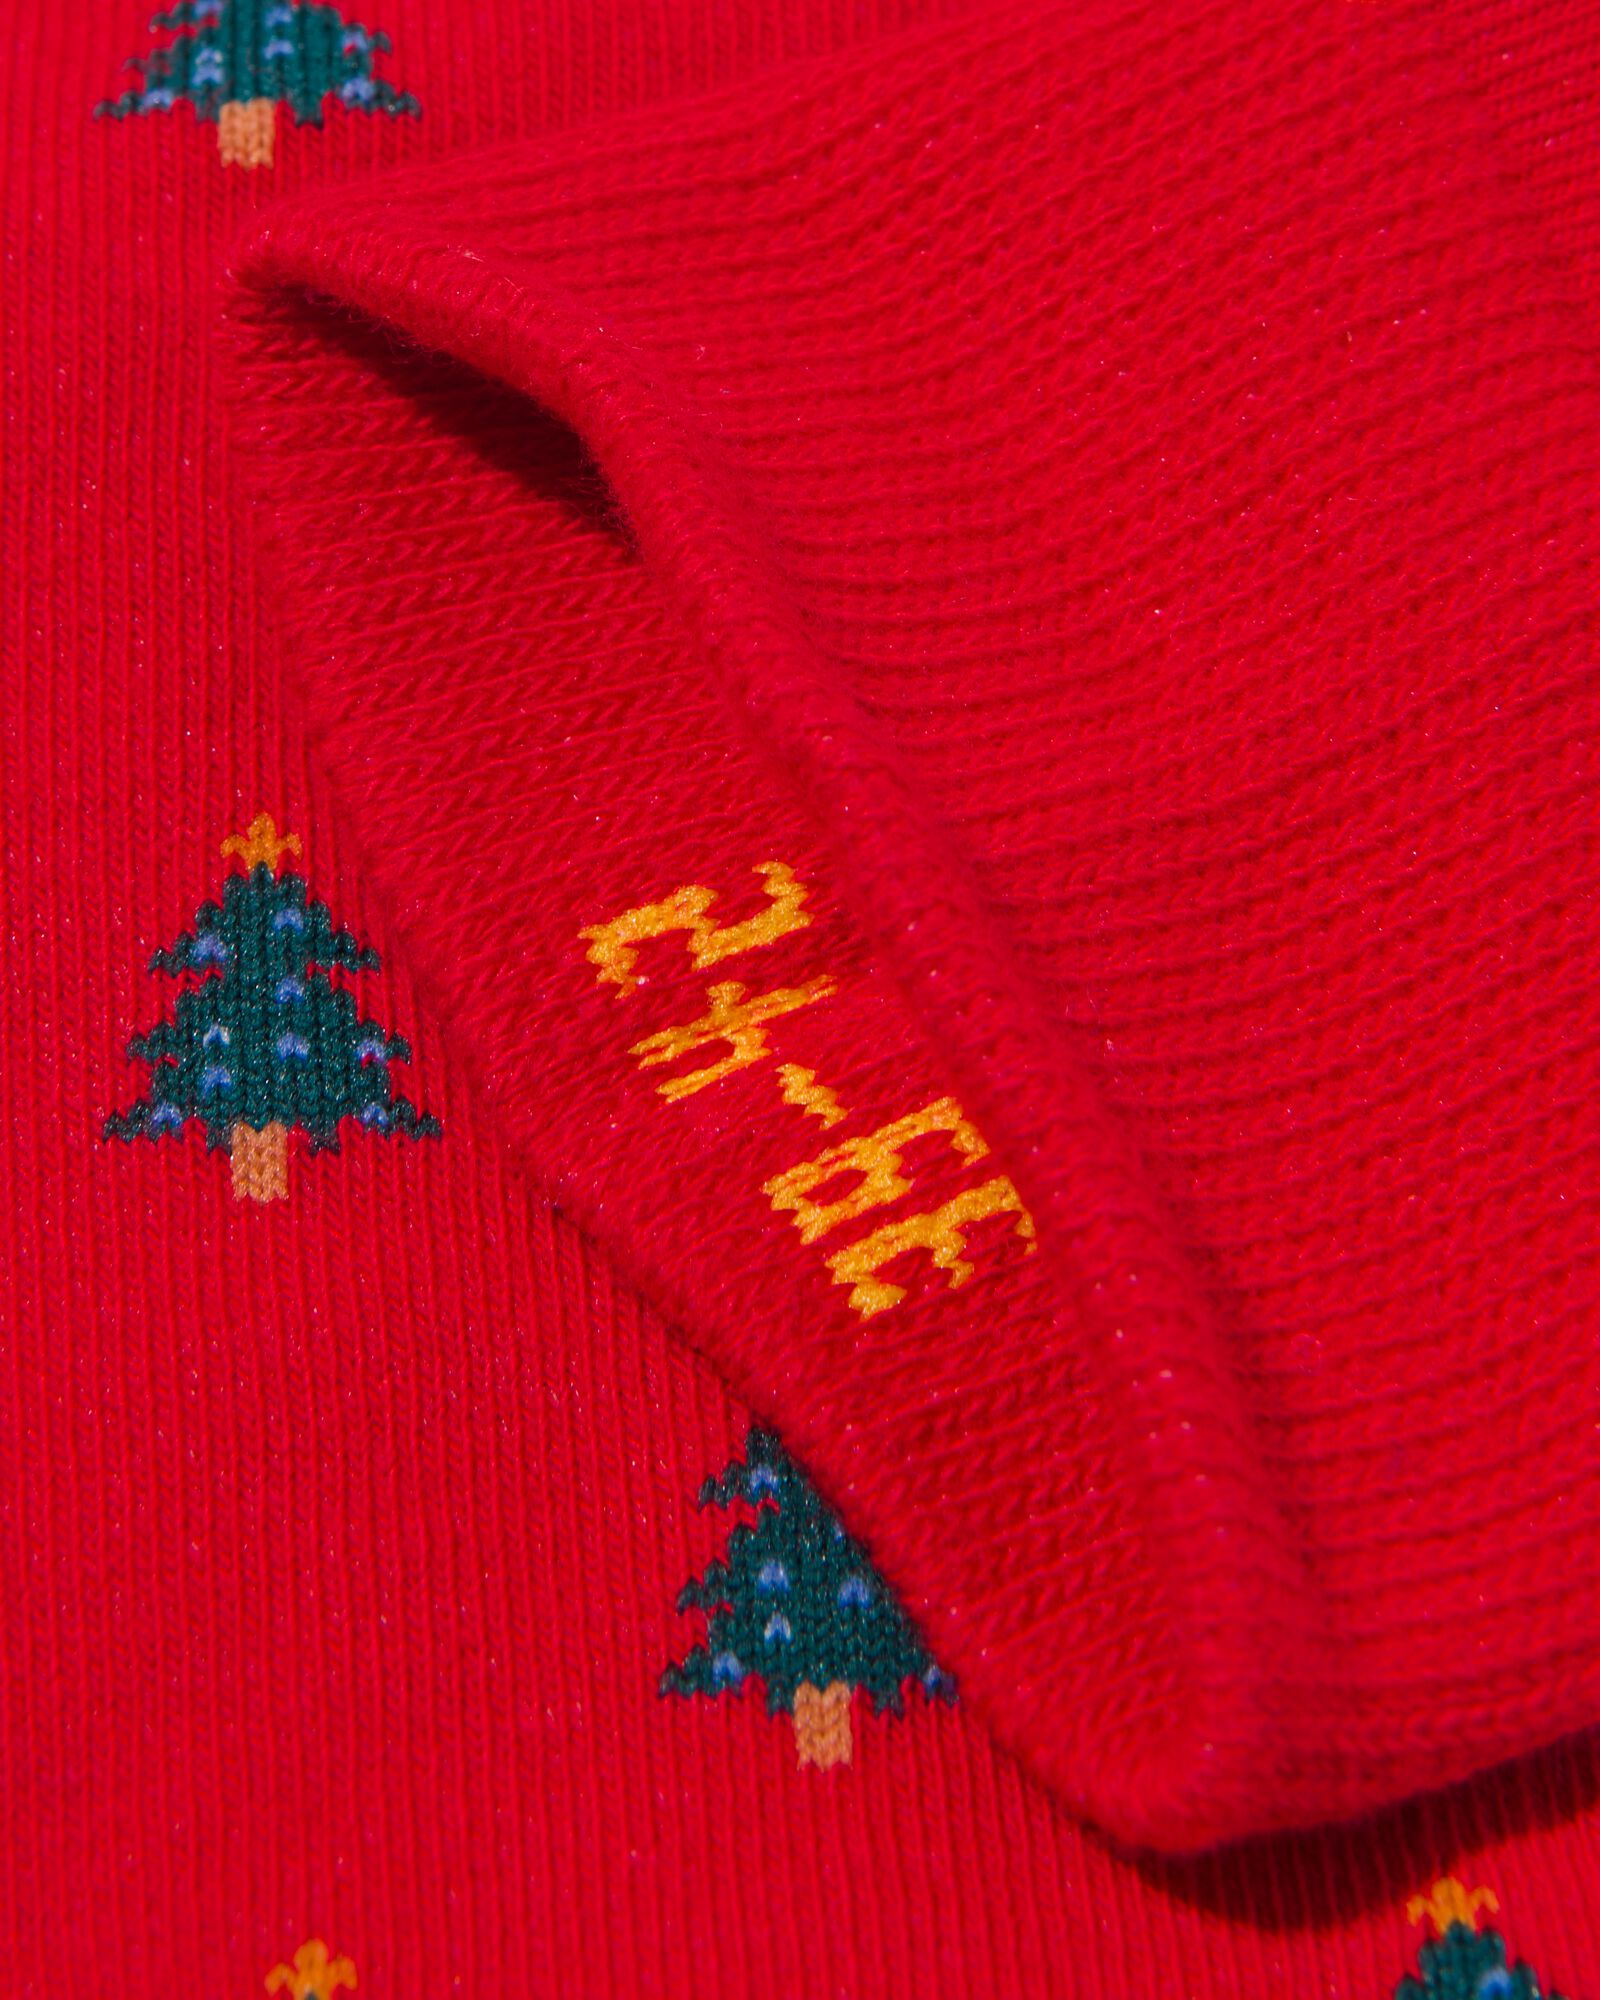 chaussettes homme avec coton rouge rouge - 4170610RED - HEMA